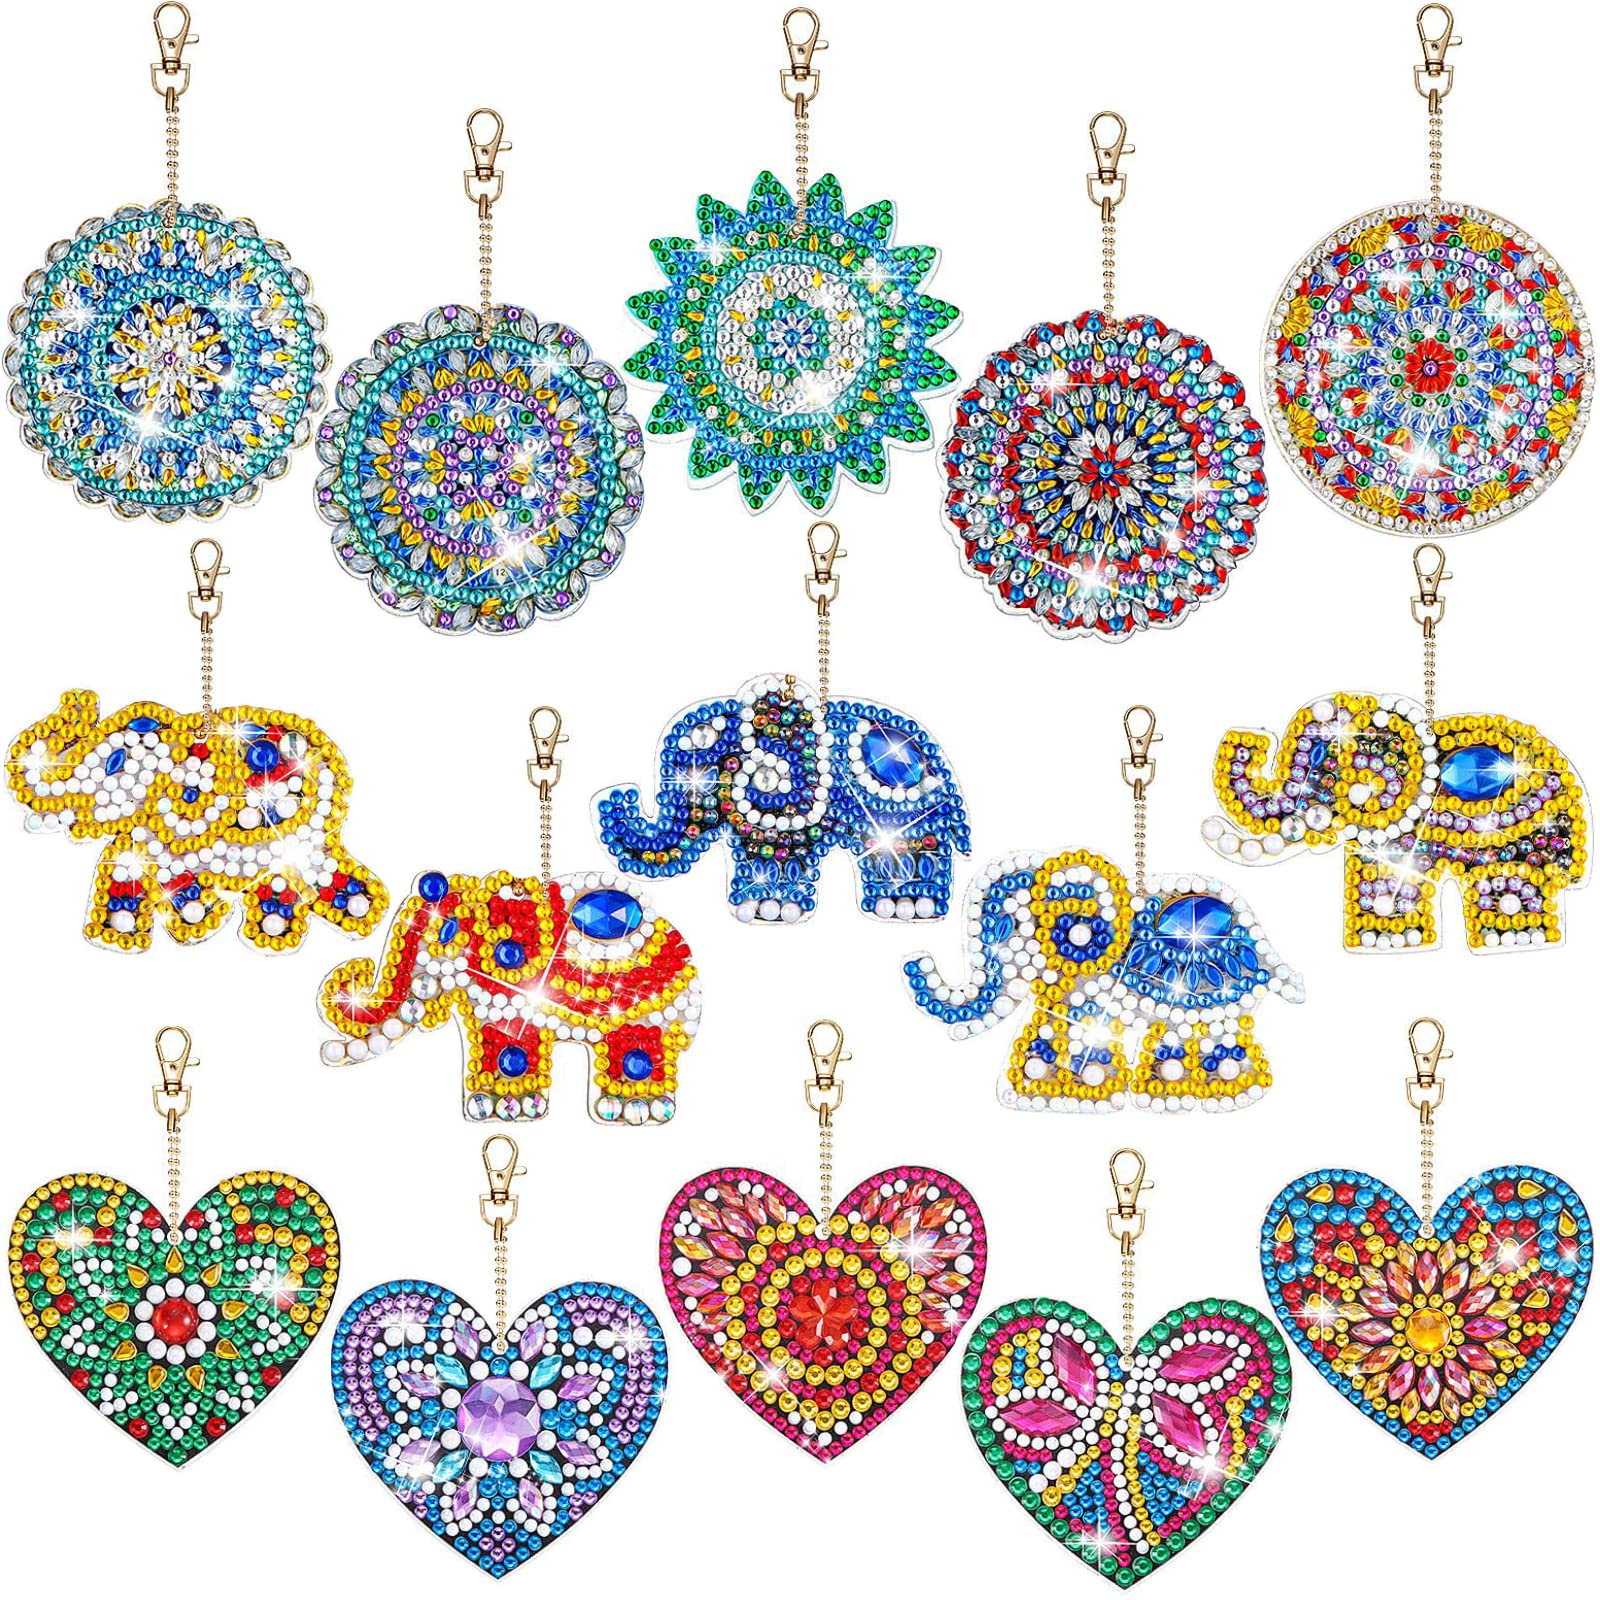 Arts And Crafts For Girls 15pcs Suncatchers Gem Keychains Mosaic